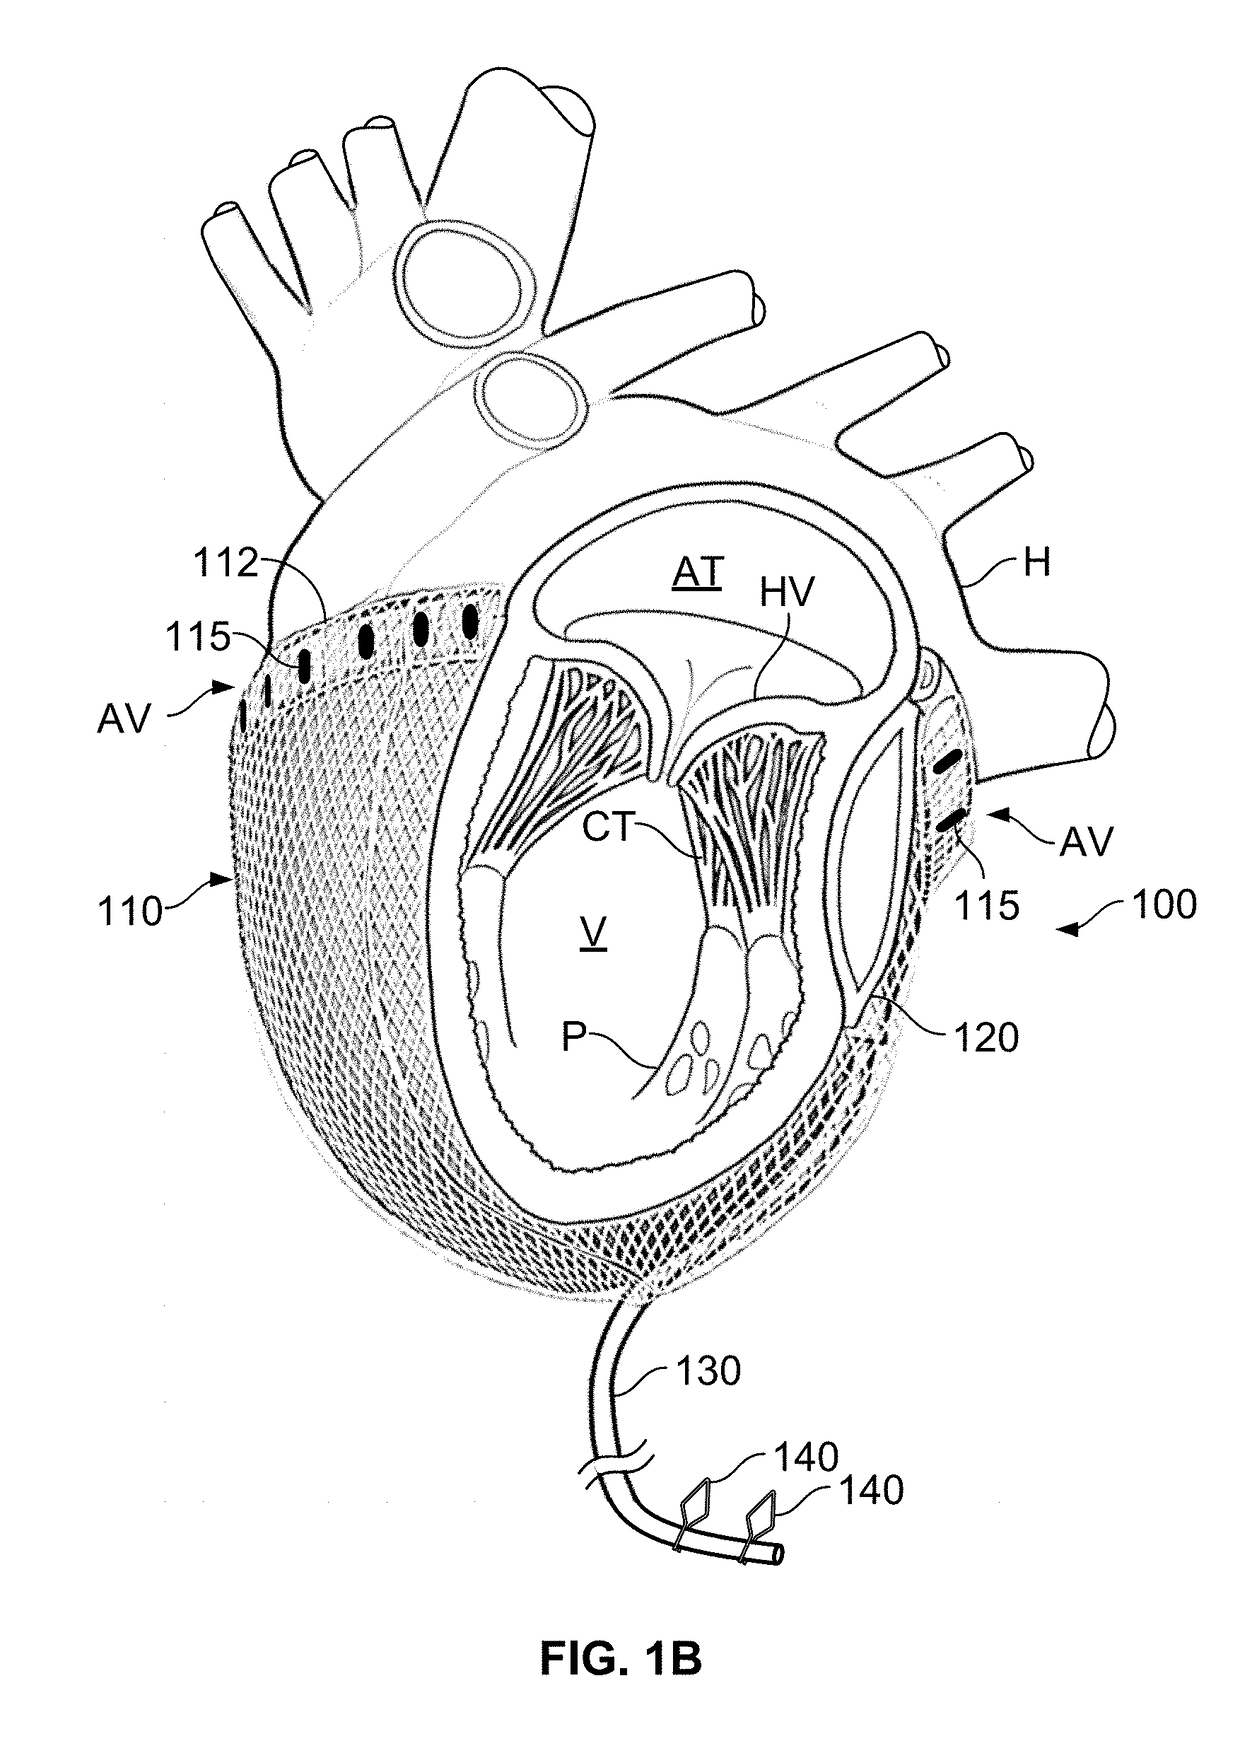 Cardiac treatment system and method